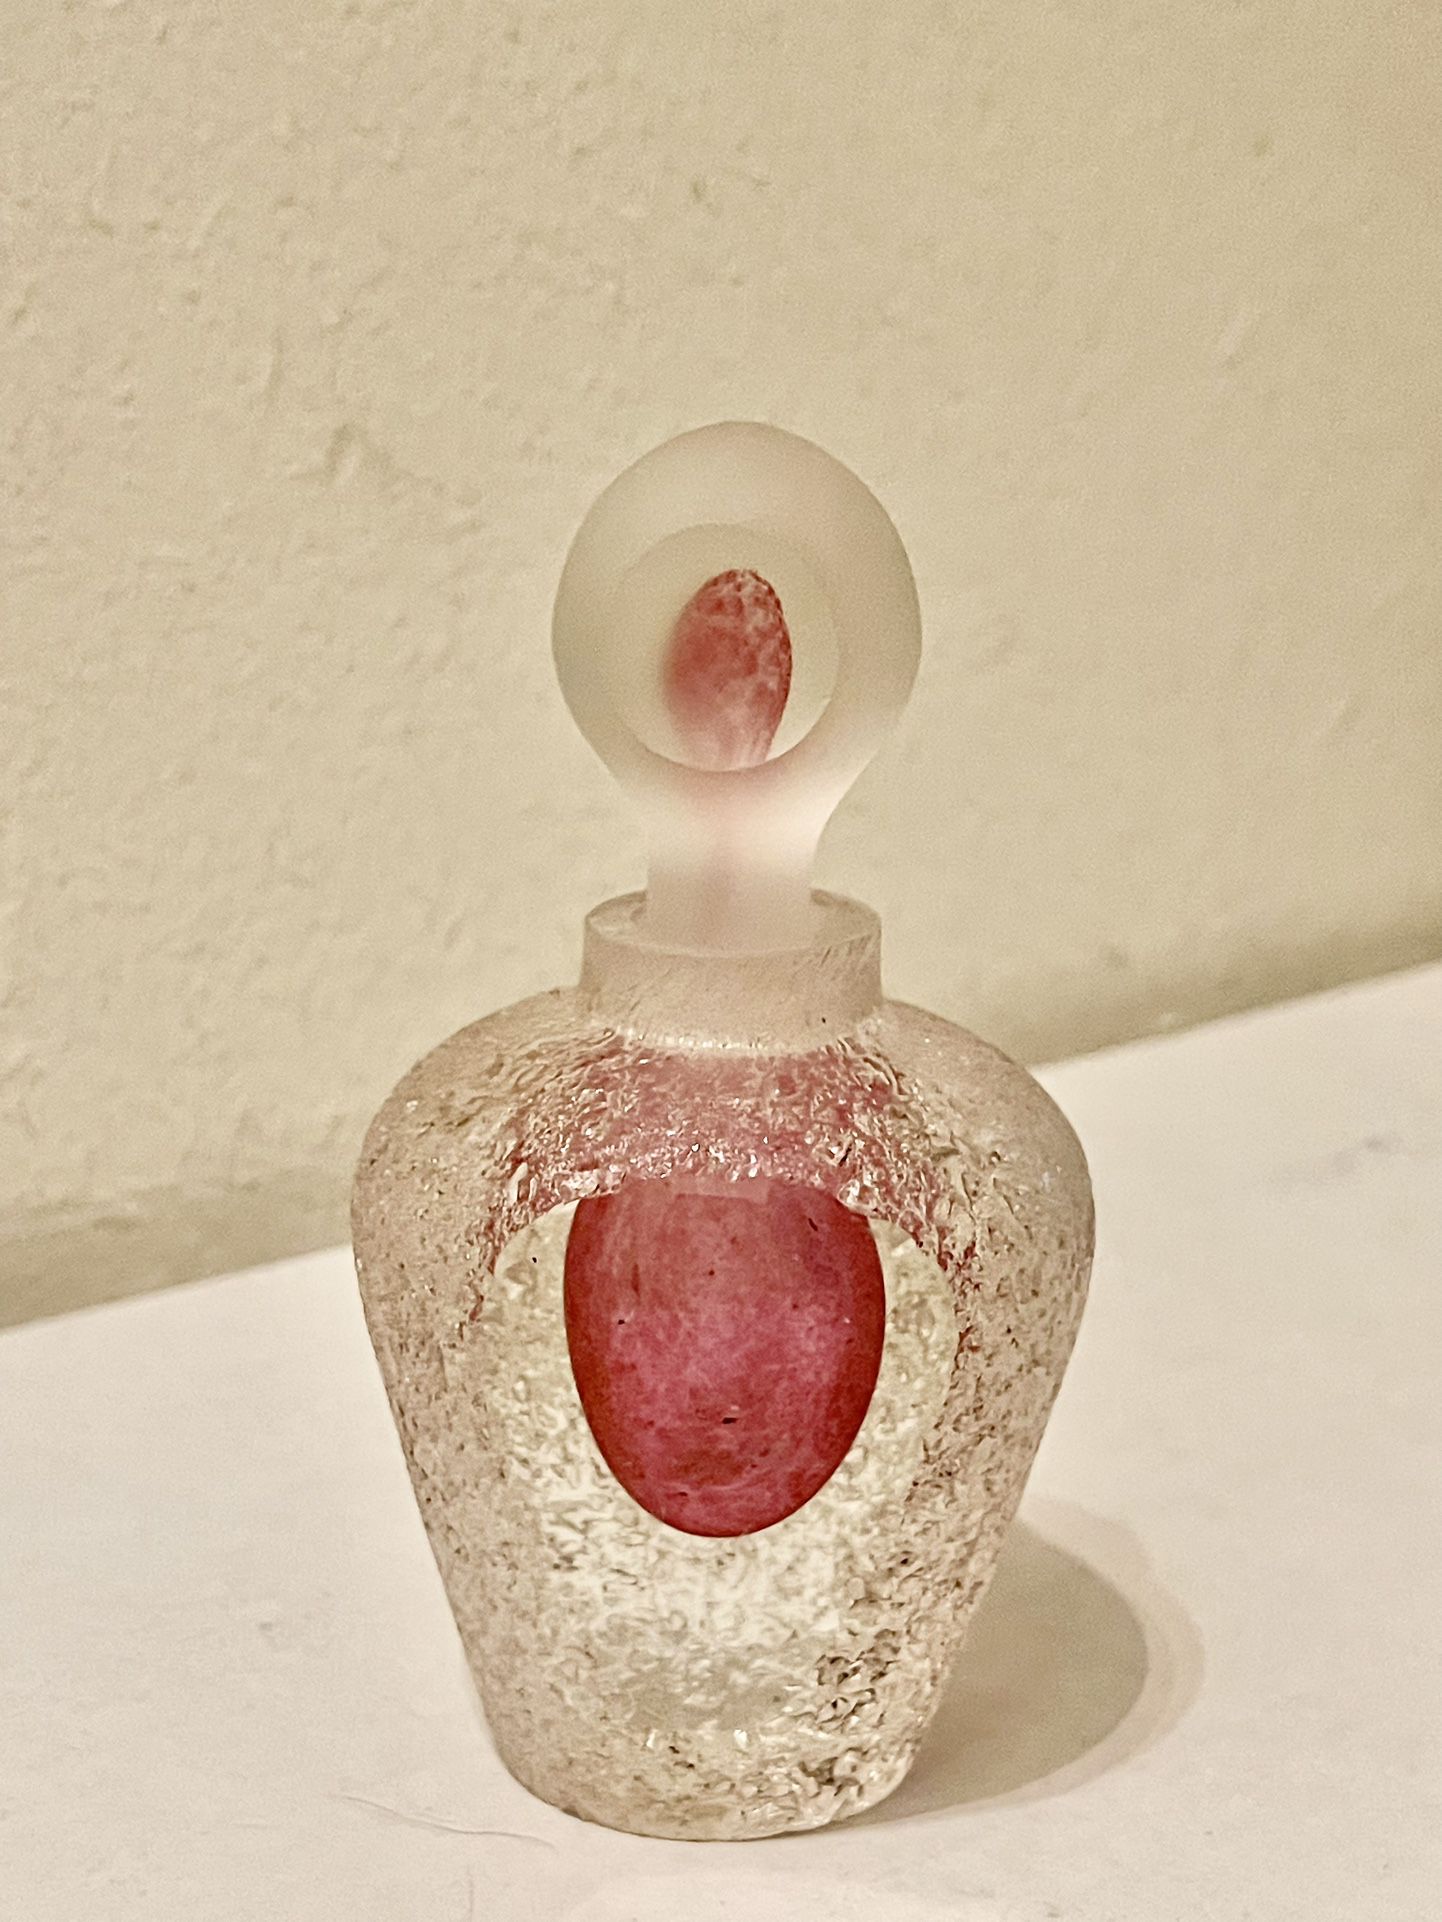 Fifth Avenue Crystal LTD. Art Glass Perfume Bottle W/ Stopper Purple/pink EMPTY This exquisite art glass perfume bottle from Fifth Avenue Crystal LTD